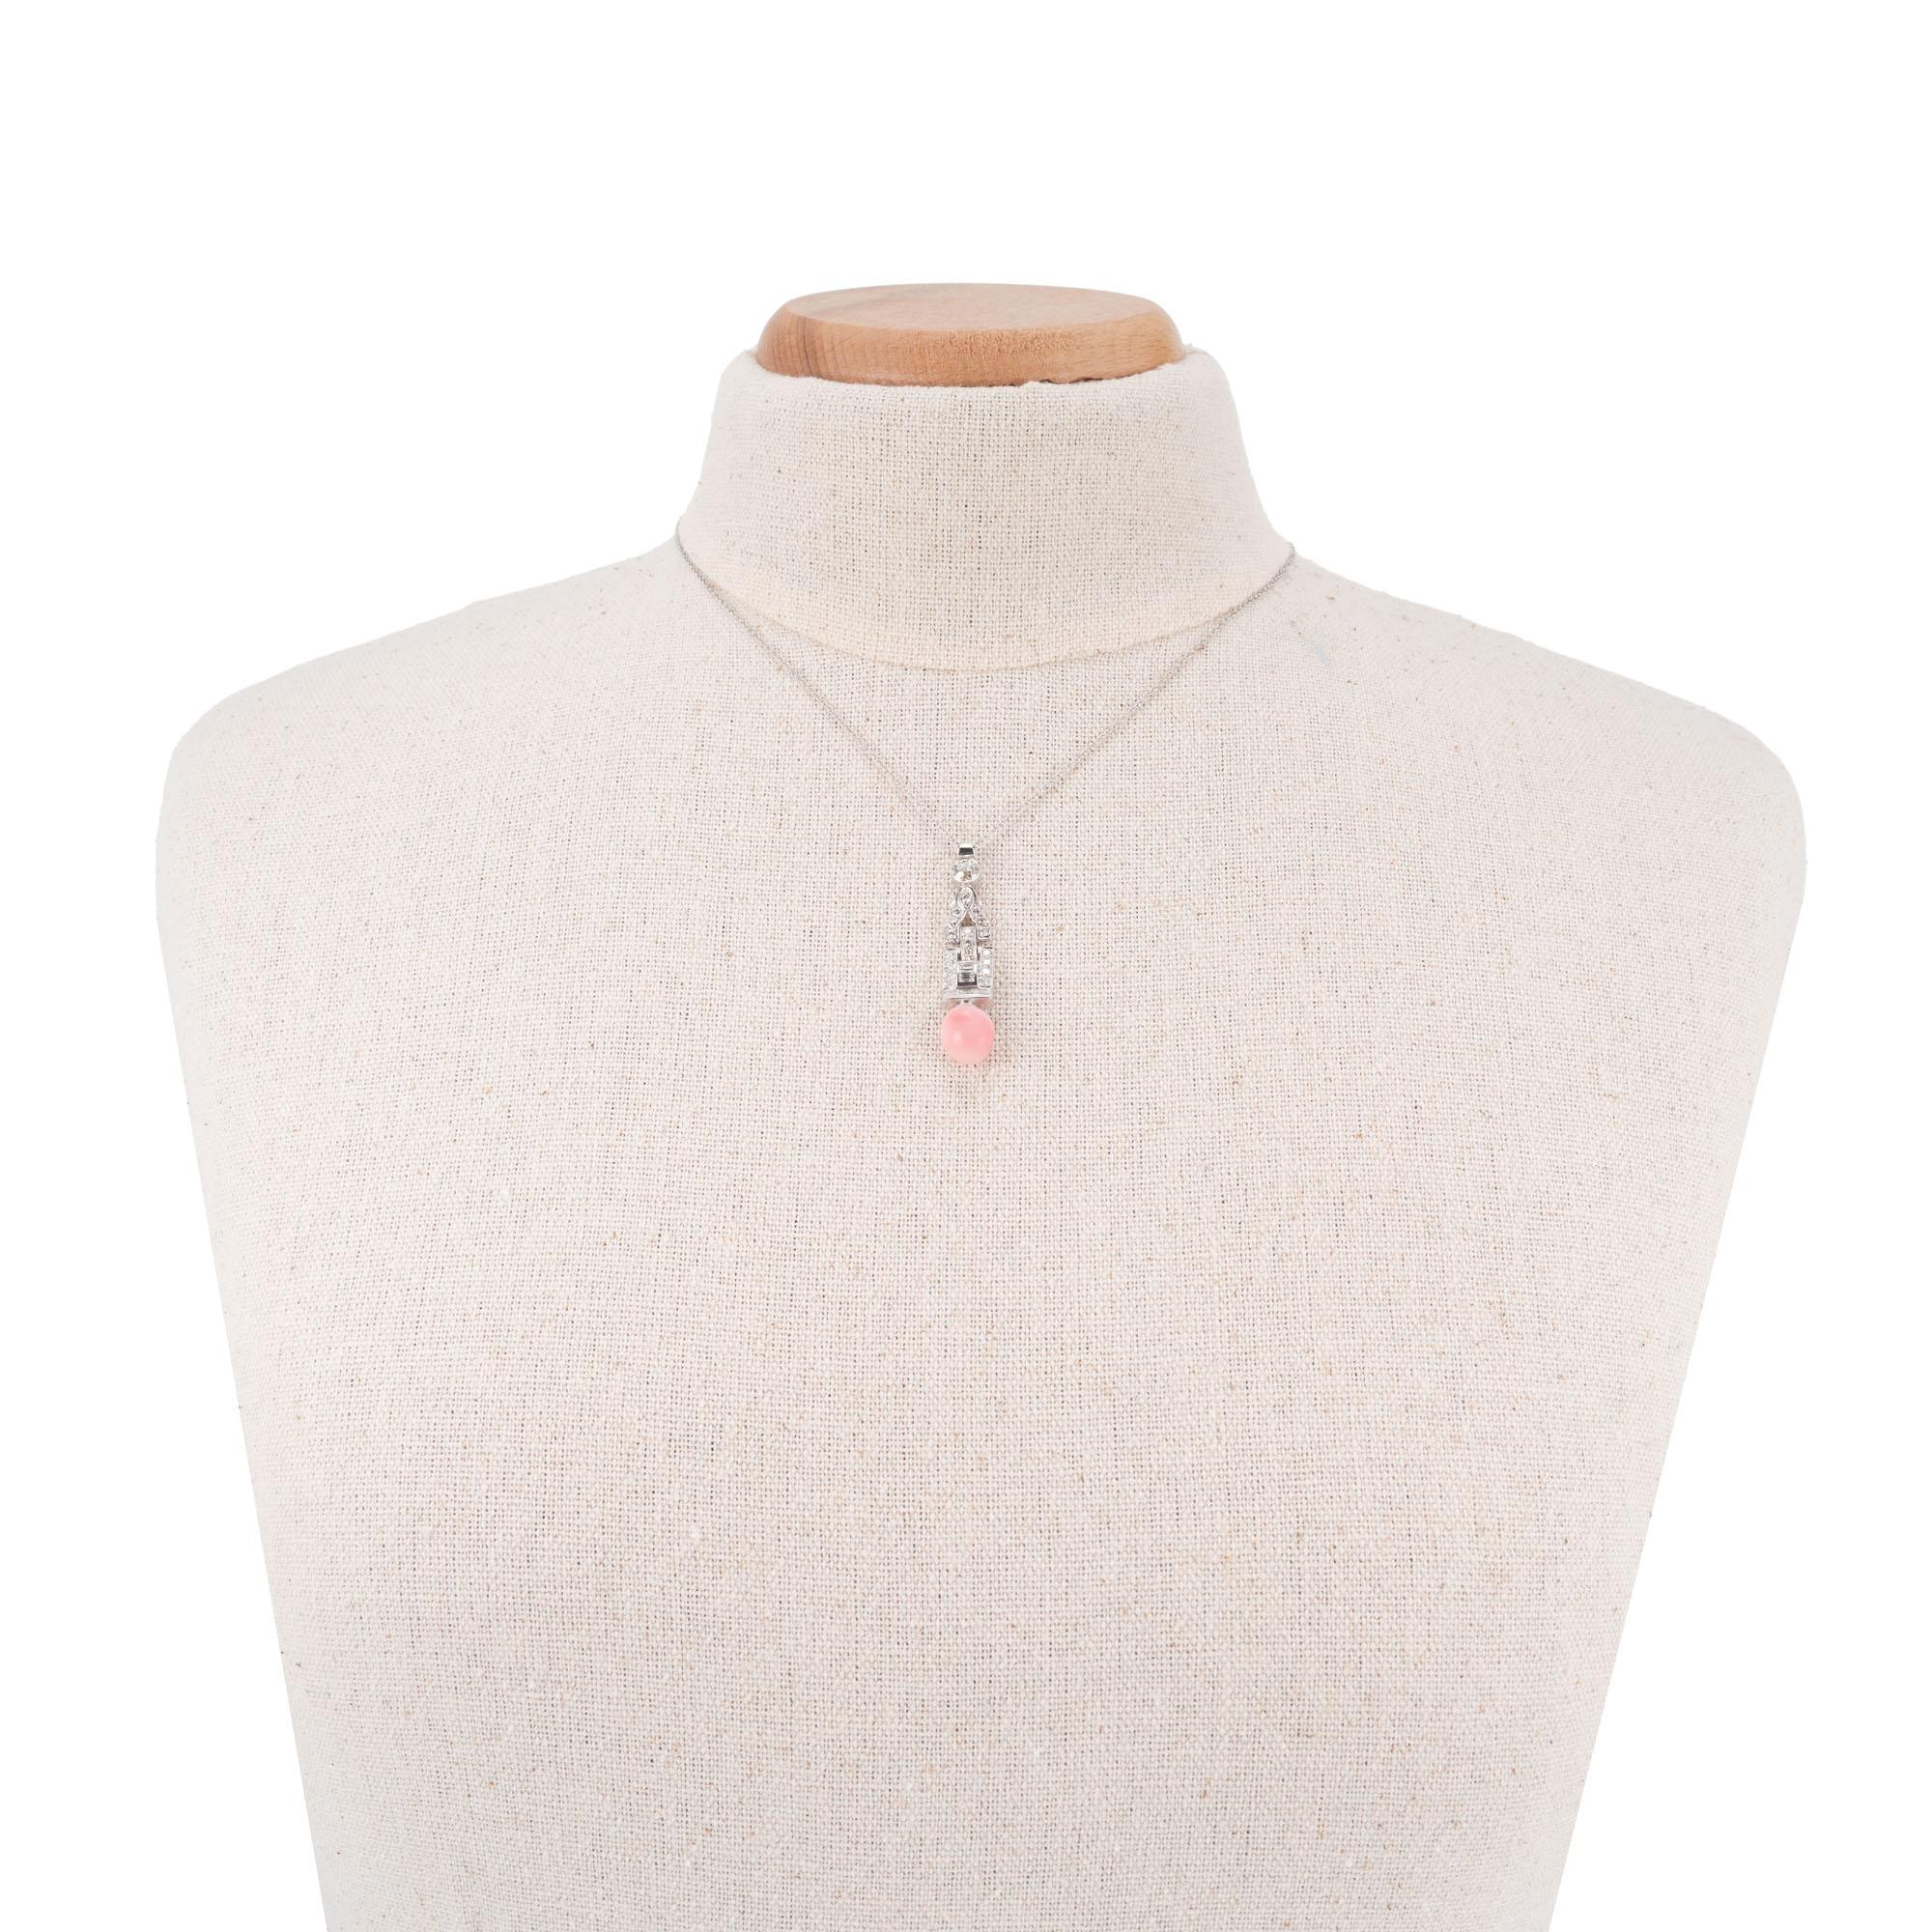 Round Cut GIA Certified Art Deco 5.11 Carat Conch Pearl Diamond Platinum Pendant Necklace